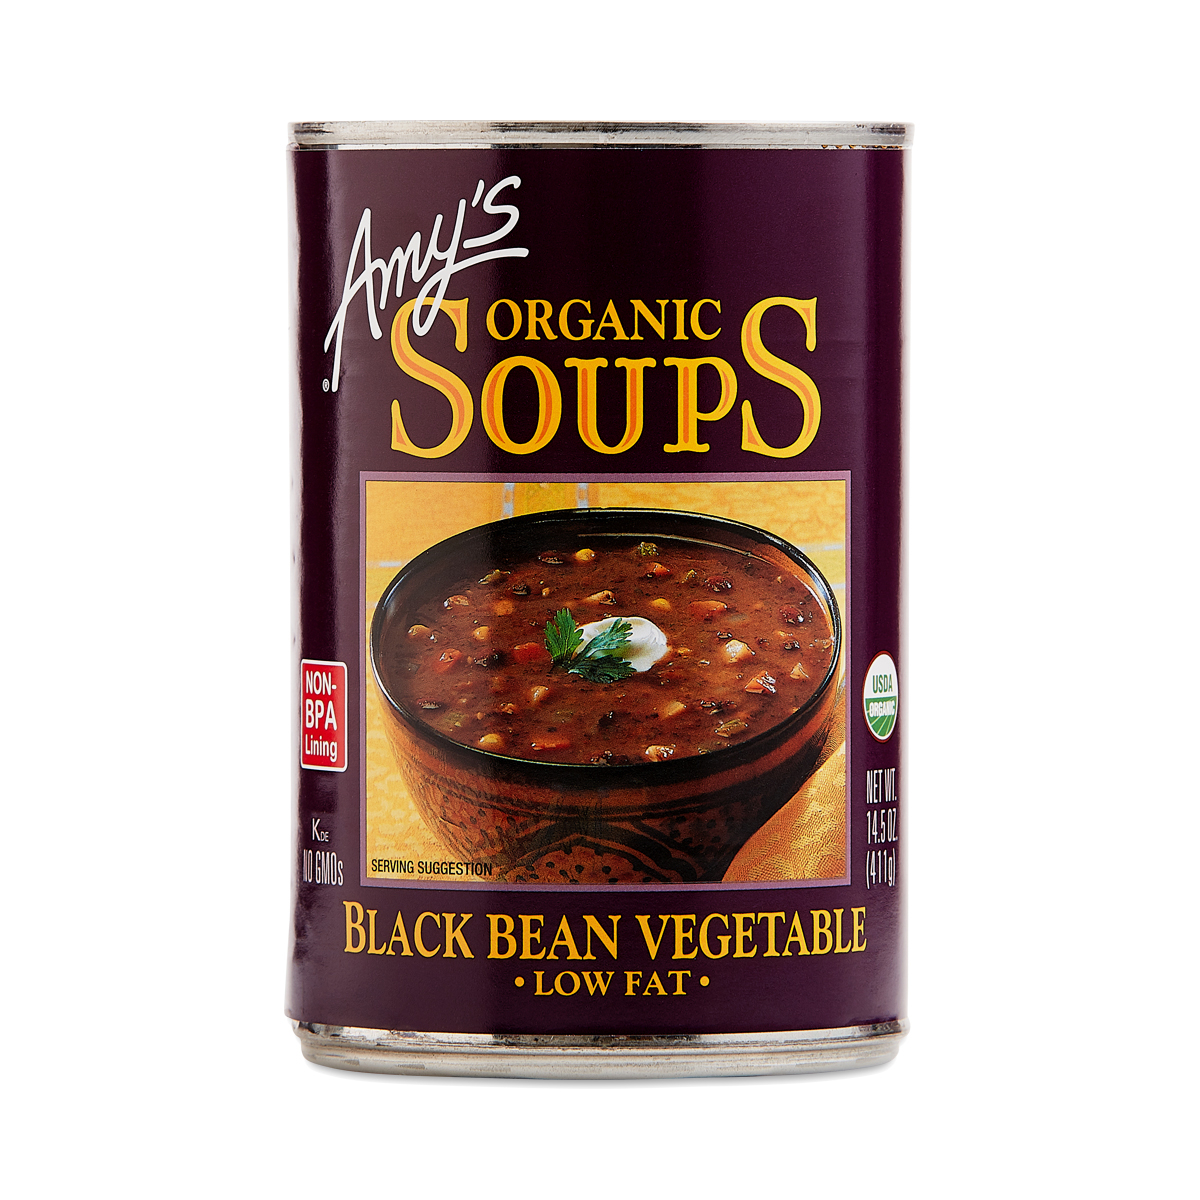 Amy's Black Bean Vegetable Soup 14.5 oz. can